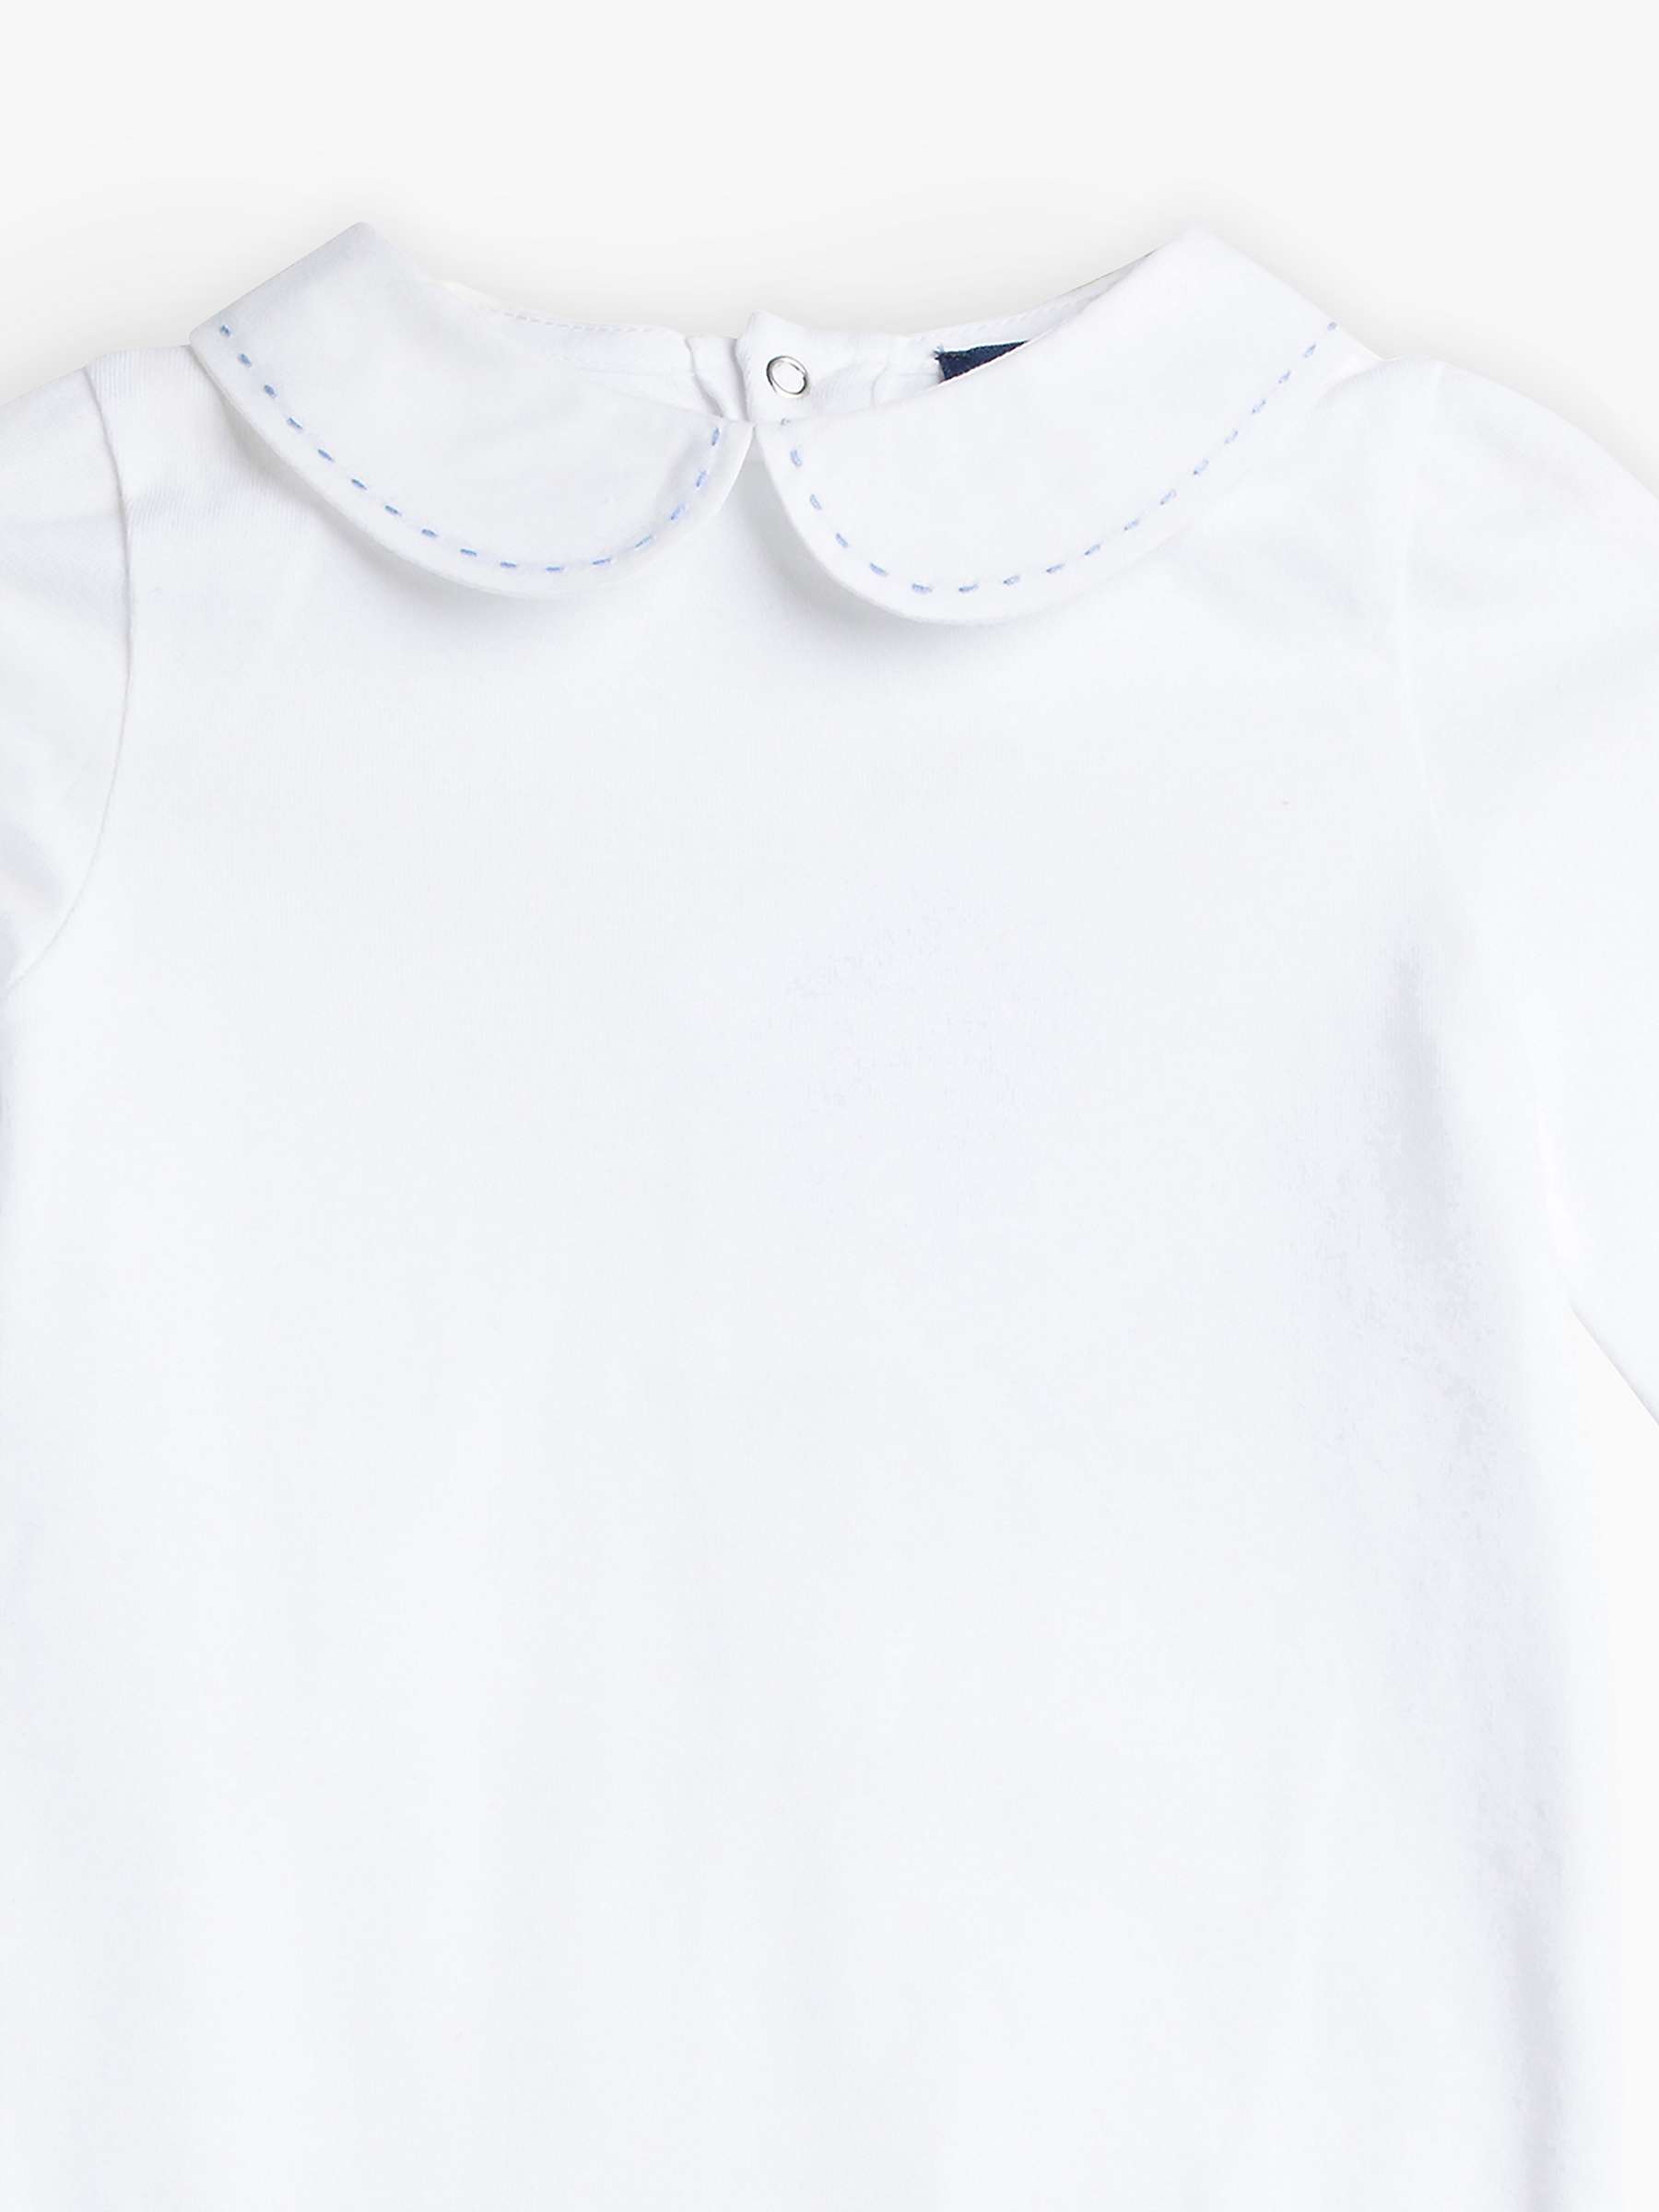 Buy Trotters Baby Milo Stitched Cotton Blend Bodysuit, White/Pale Blue Online at johnlewis.com